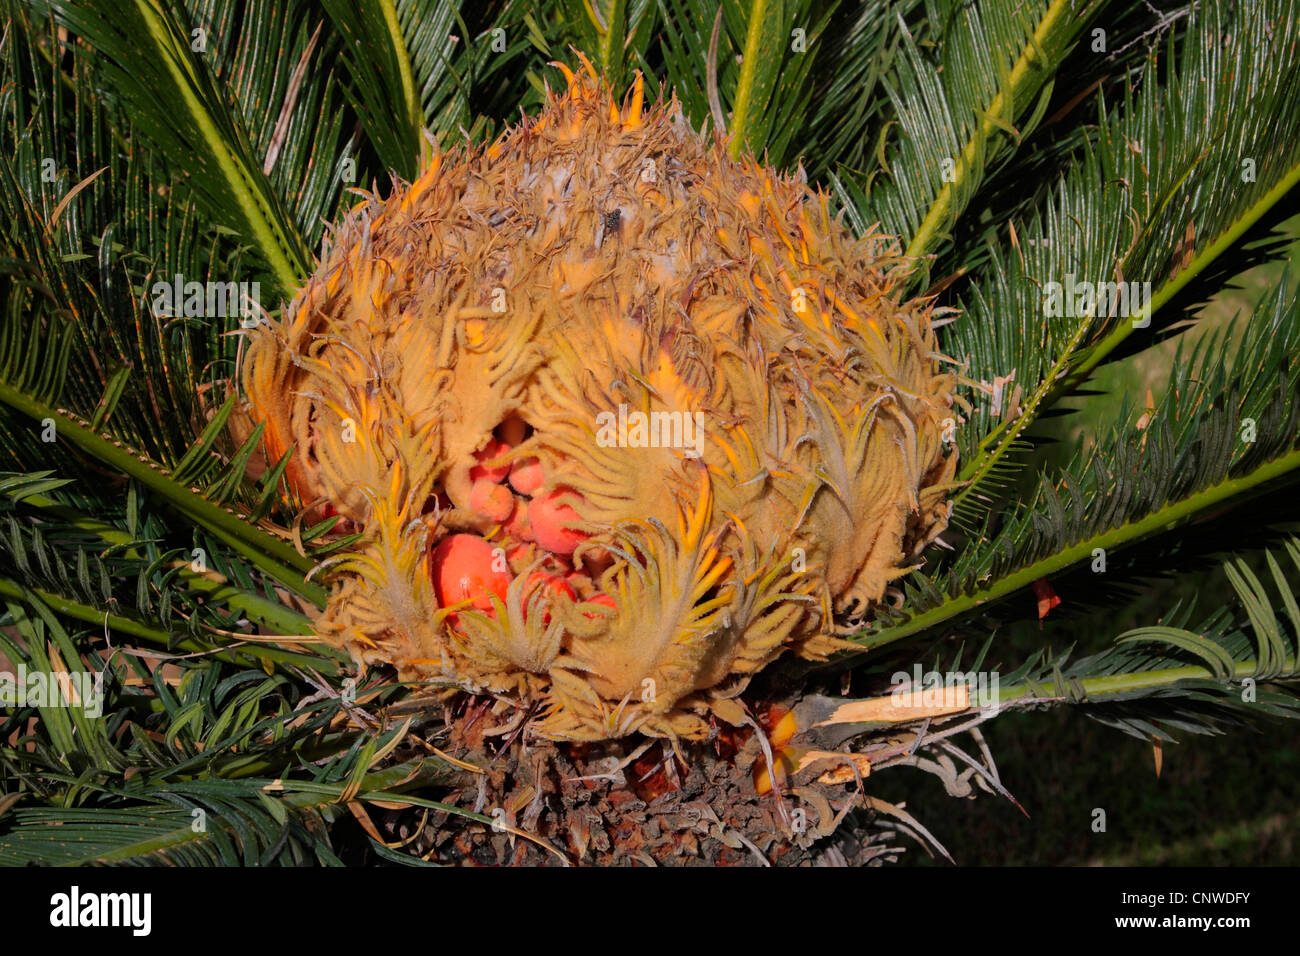 sago palm (Cycas revoluta), mit sporopylls an ripe seeds Stock Photo